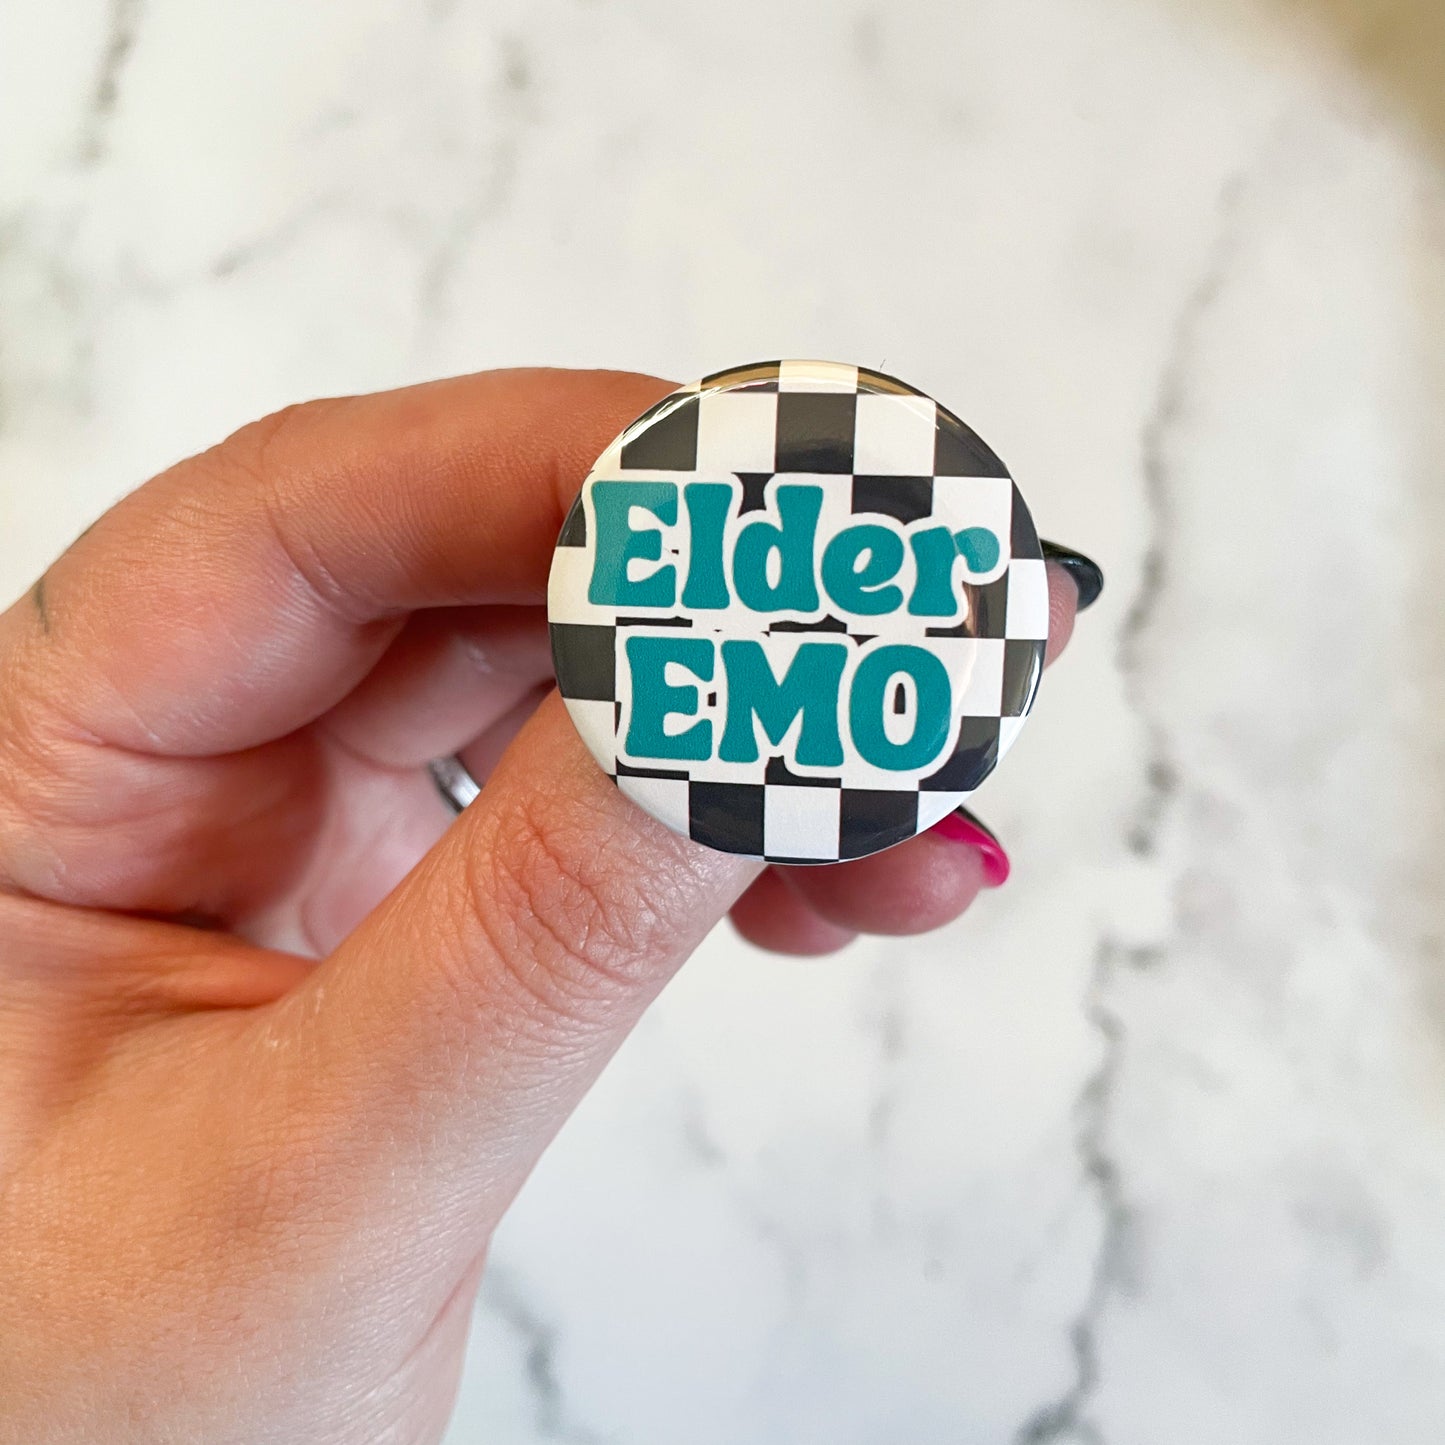 Elder Emo Button / Badge (Buy 4 Get 1 FREE)